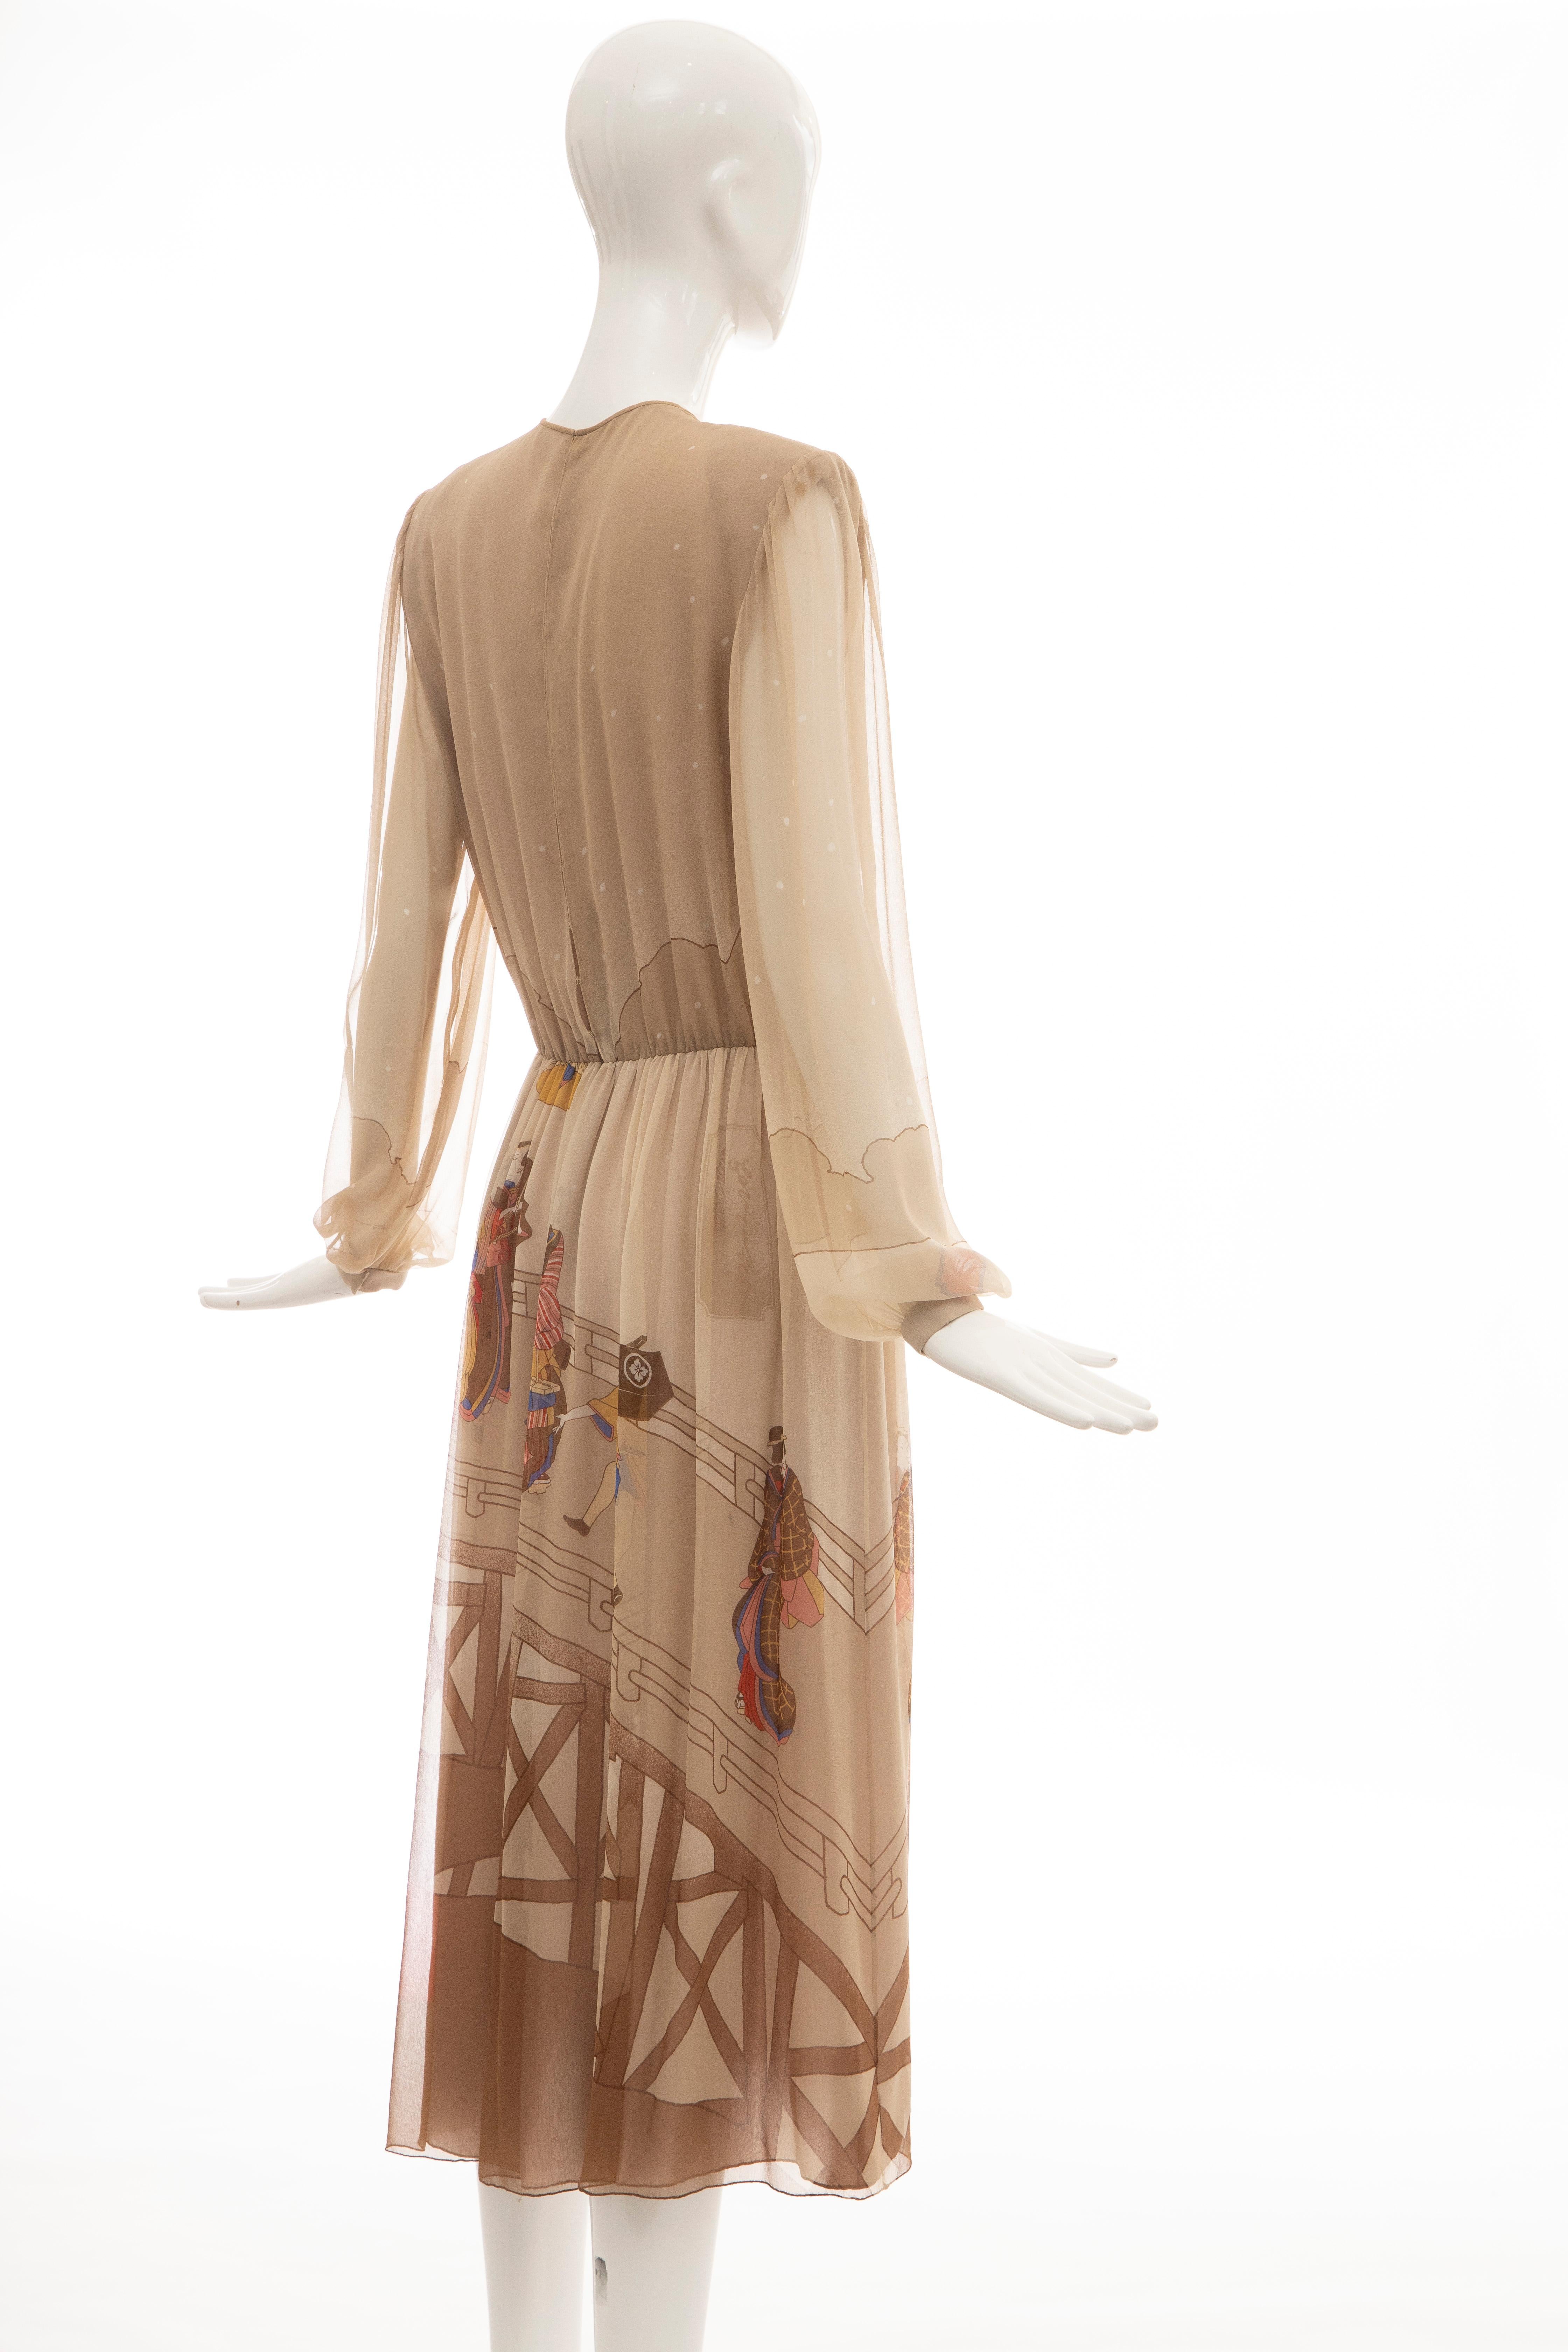 Hanae Mori Printed Geisha Silk Chiffon Dress, Circa: 1970's 1